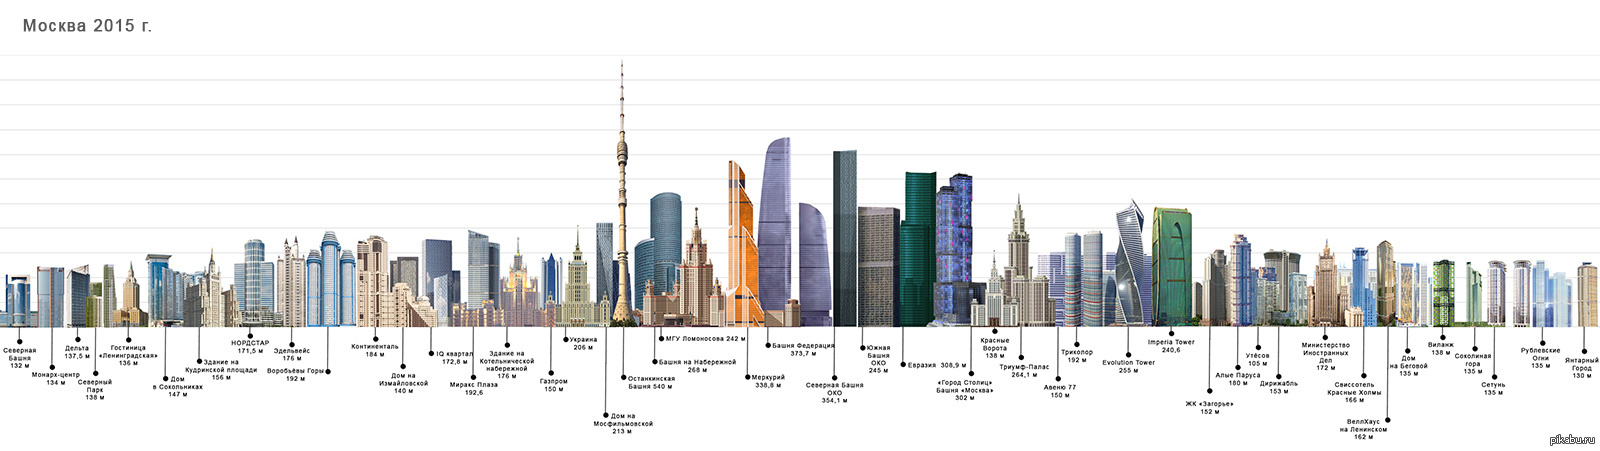 Сколько там этажей. Москва Сити высота зданий. Москва Сити план башен. Схема Москва Сити с названиями башен. Высота самого высоко здания в Москва ситм.